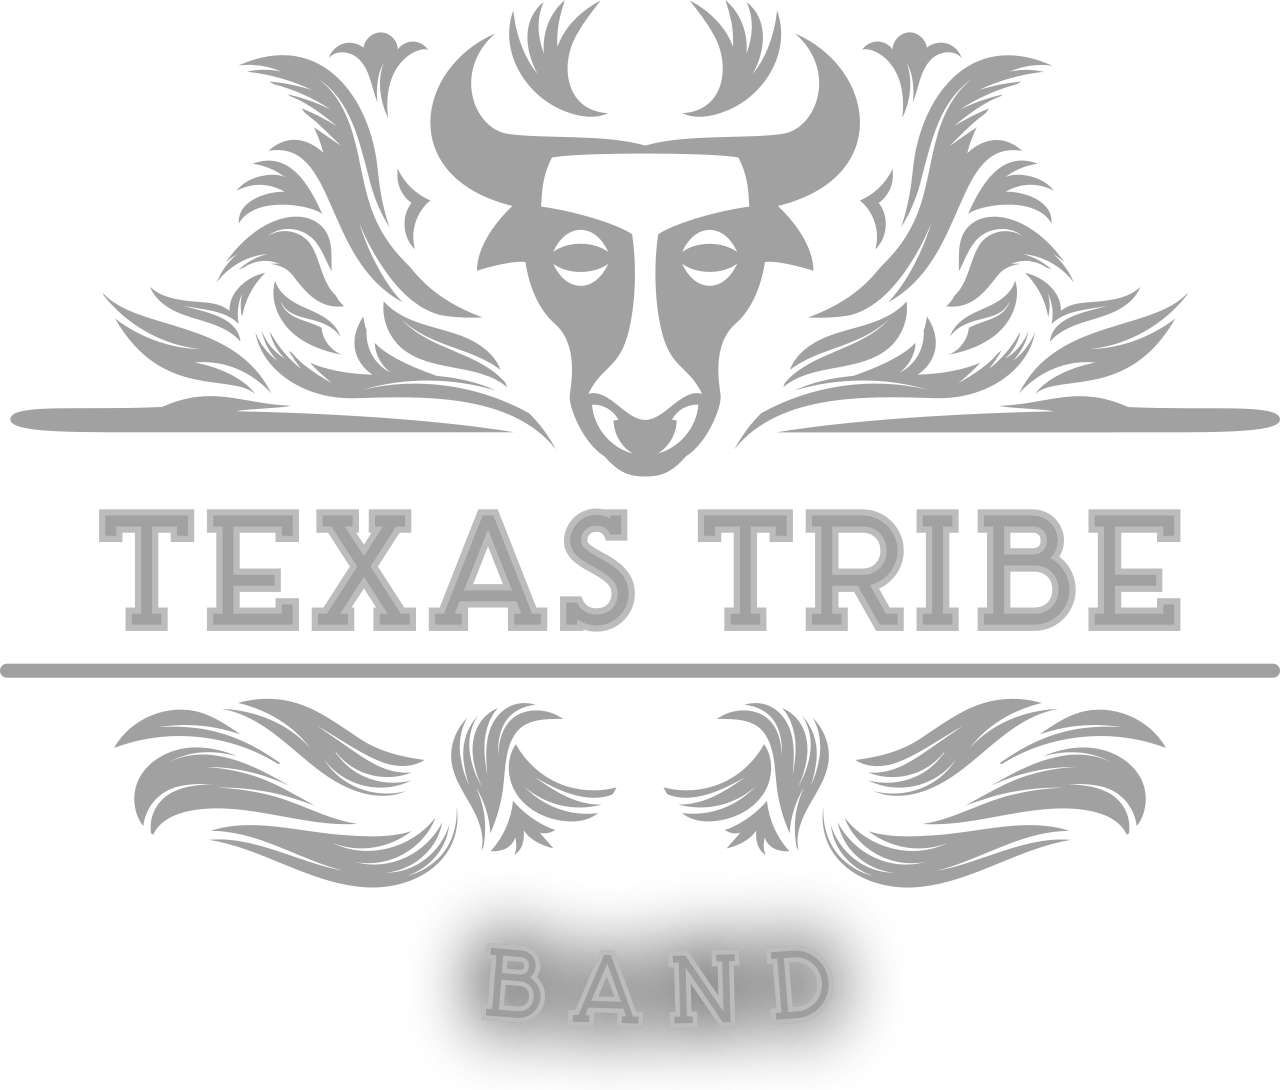 Texas Tribe's logo